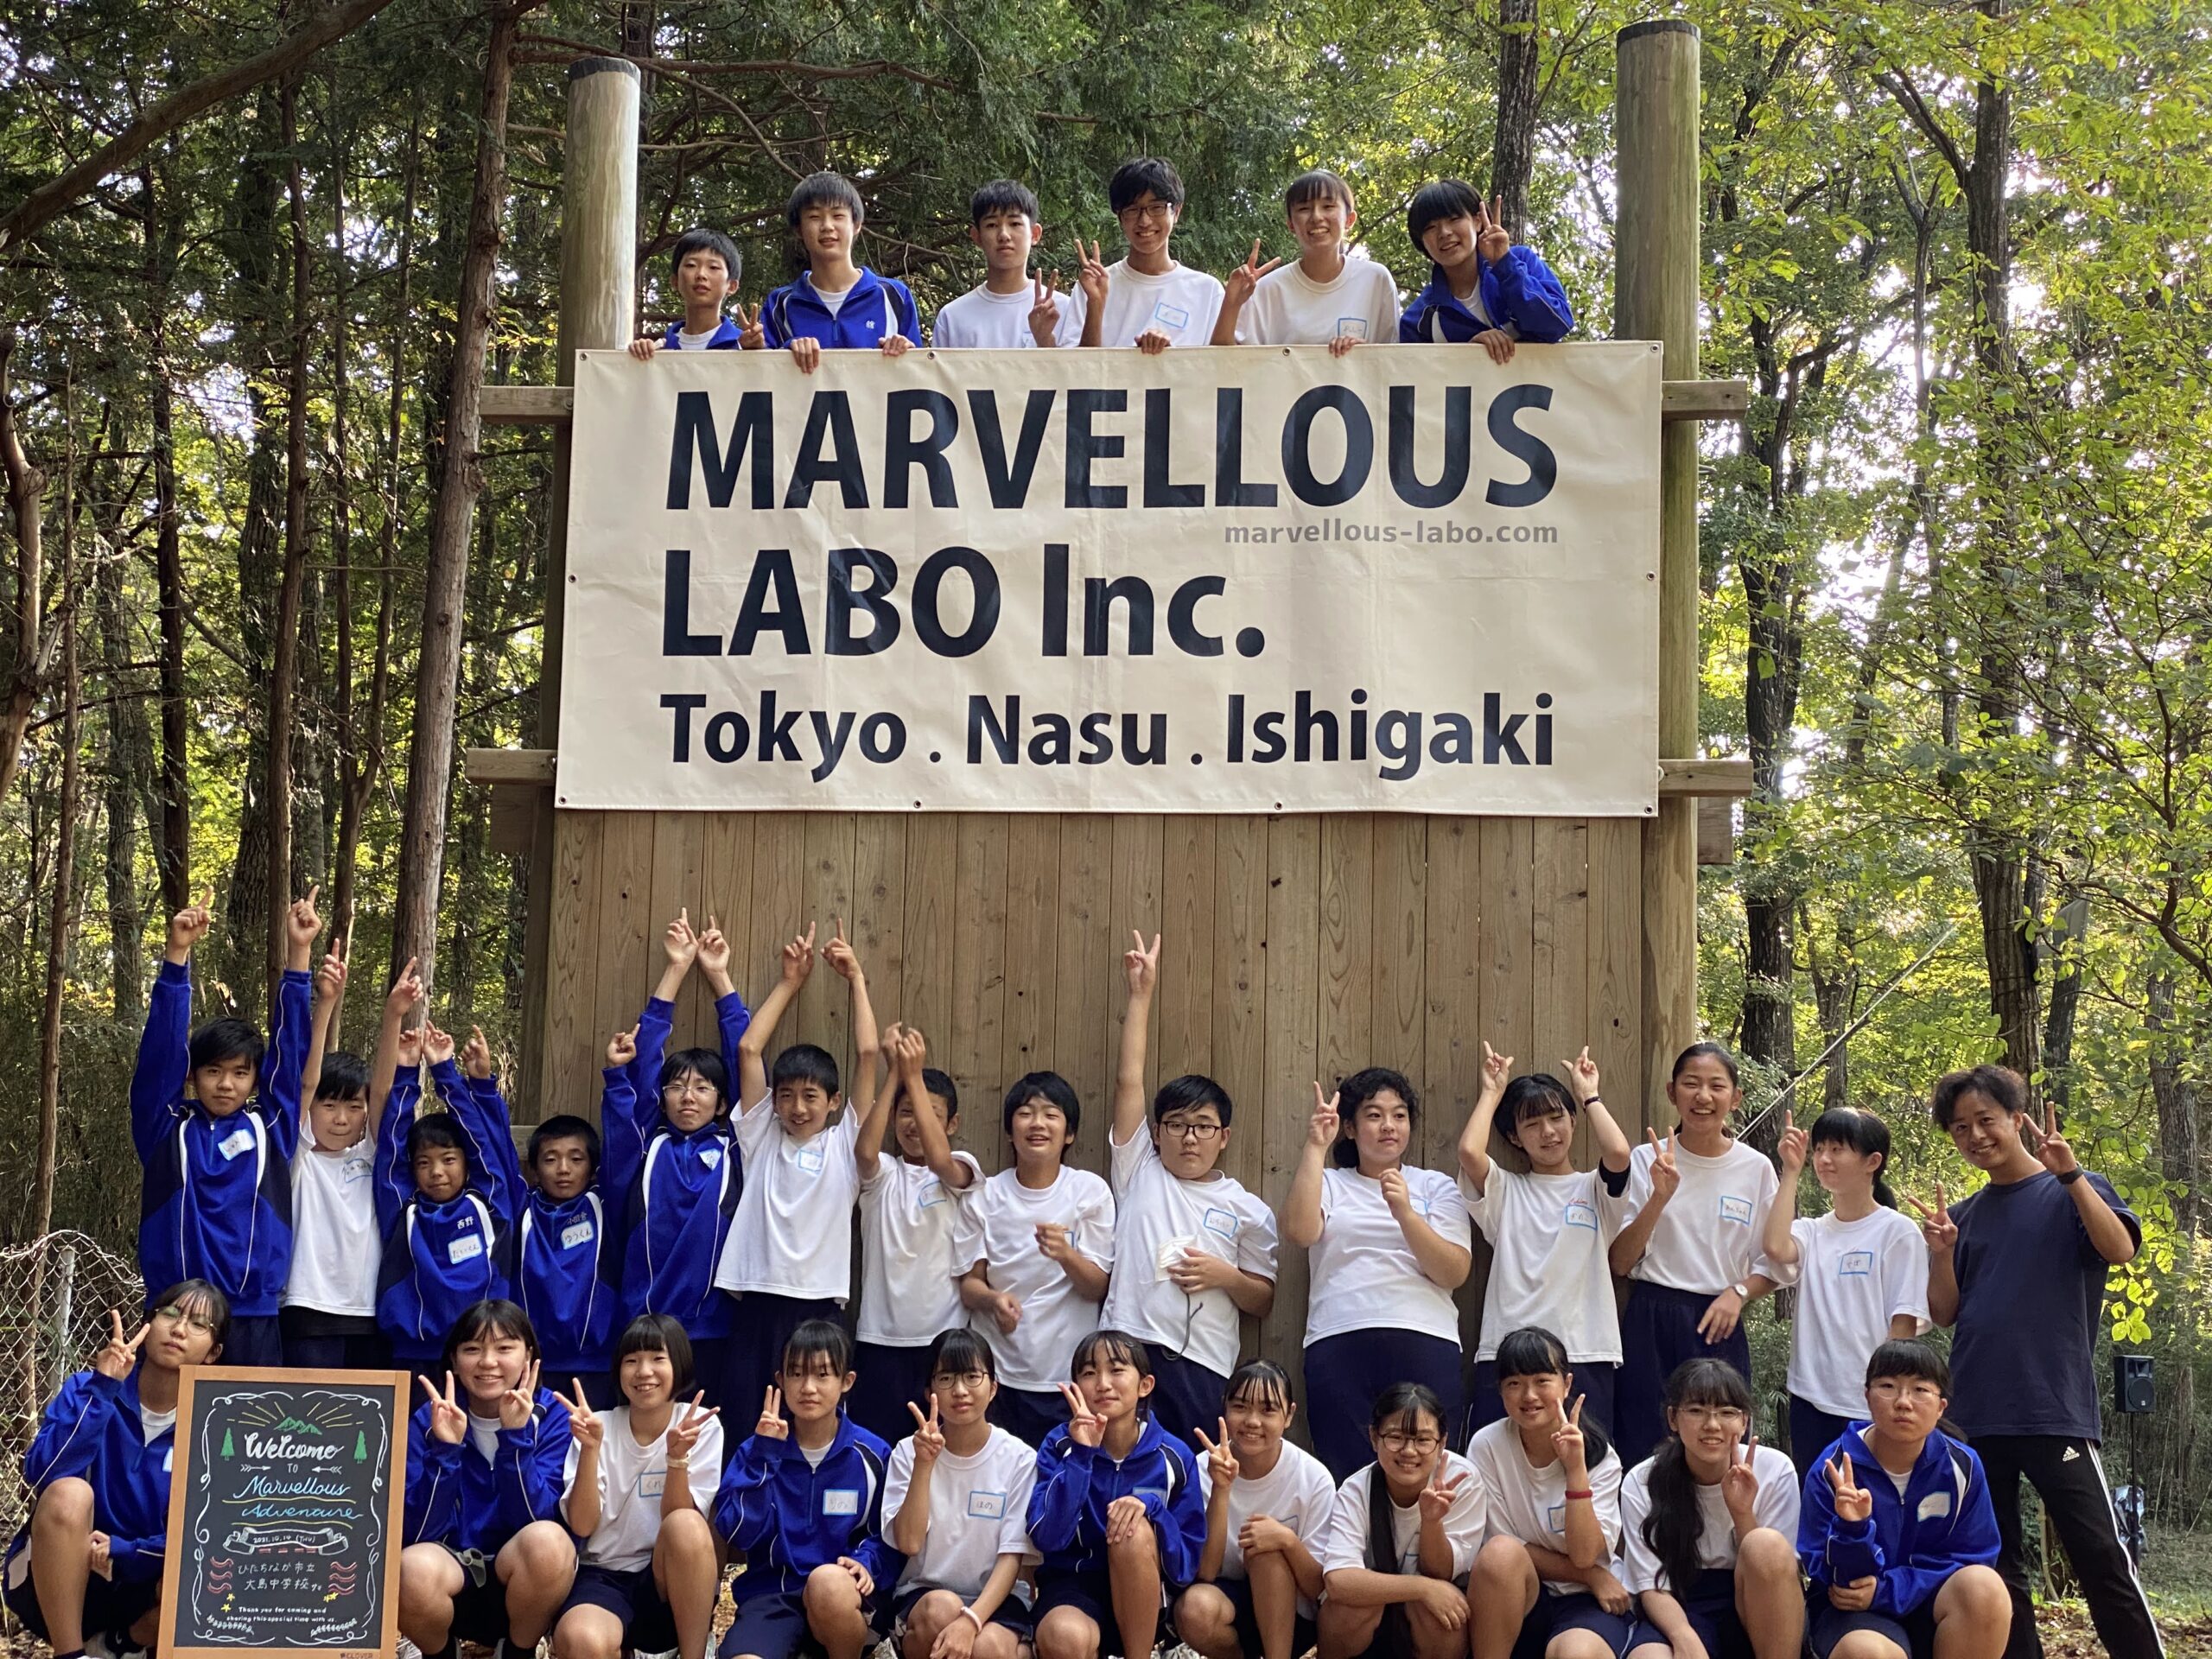 「MARVELLOUS LABO」の旗を取り付けた木製の壁の前に整列する参加者たち（ひたちなか市立大島中学校）